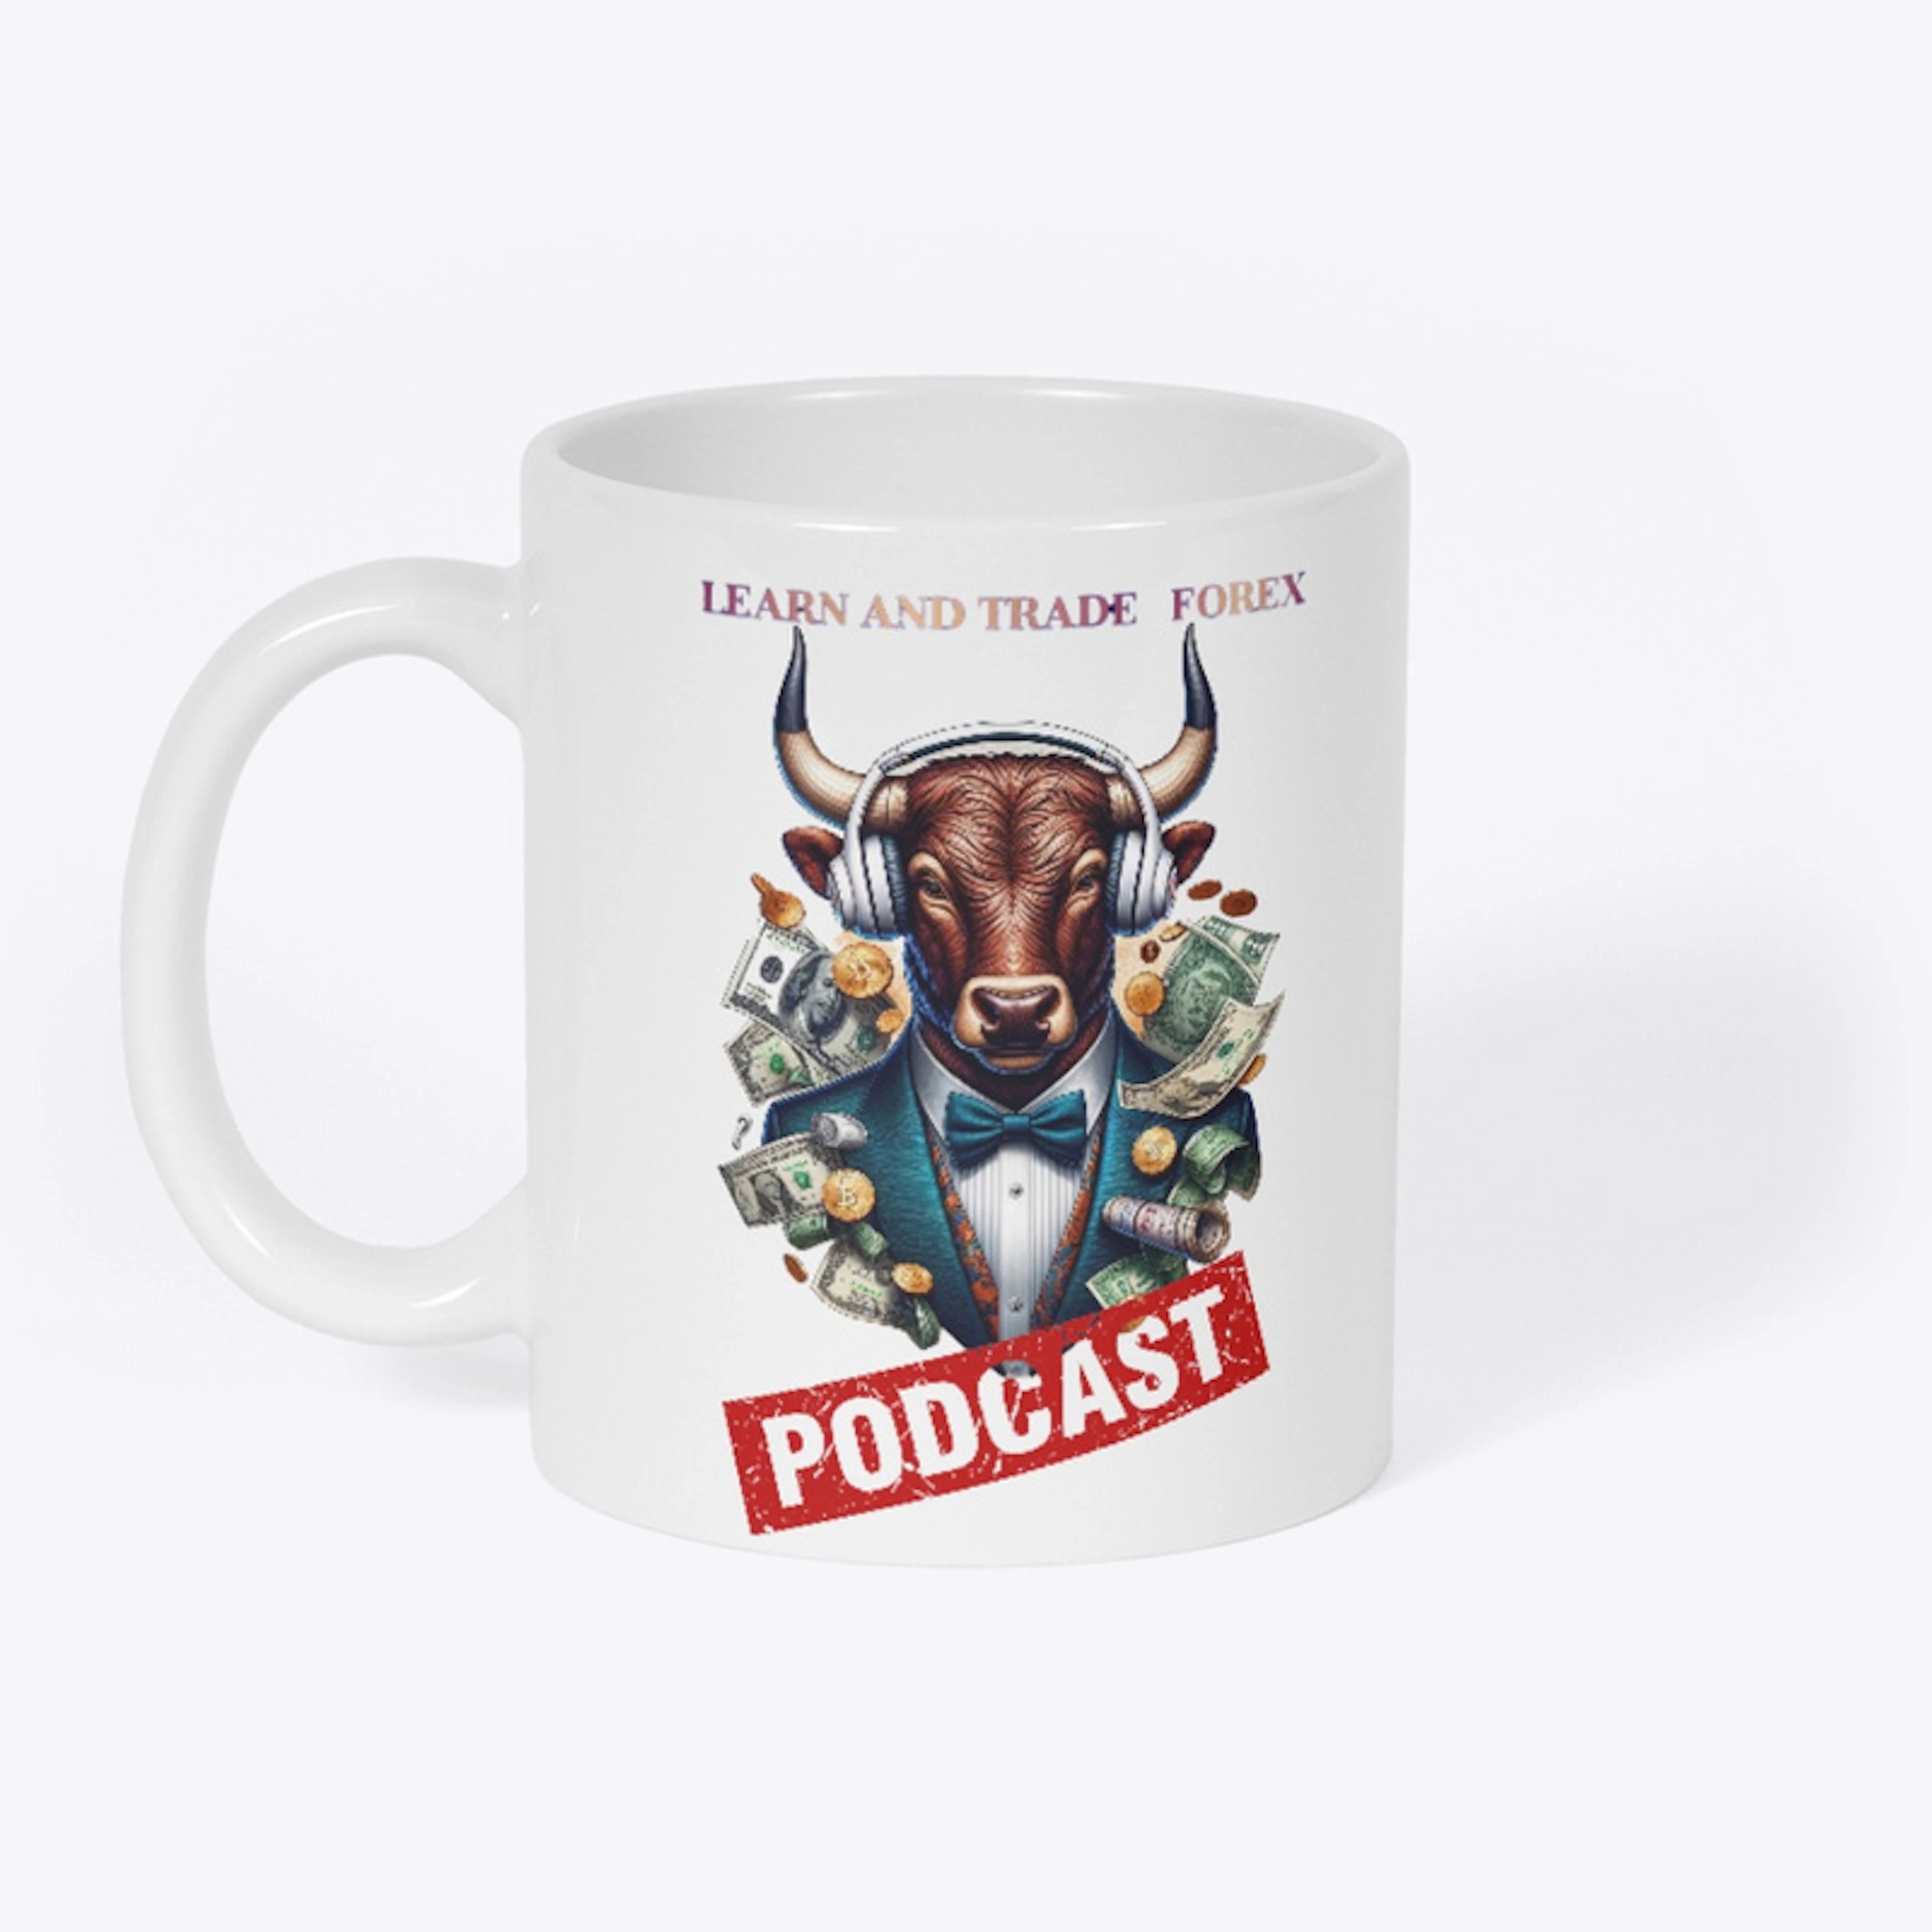 Learn and Trade Forex Podcast Coffee Mug